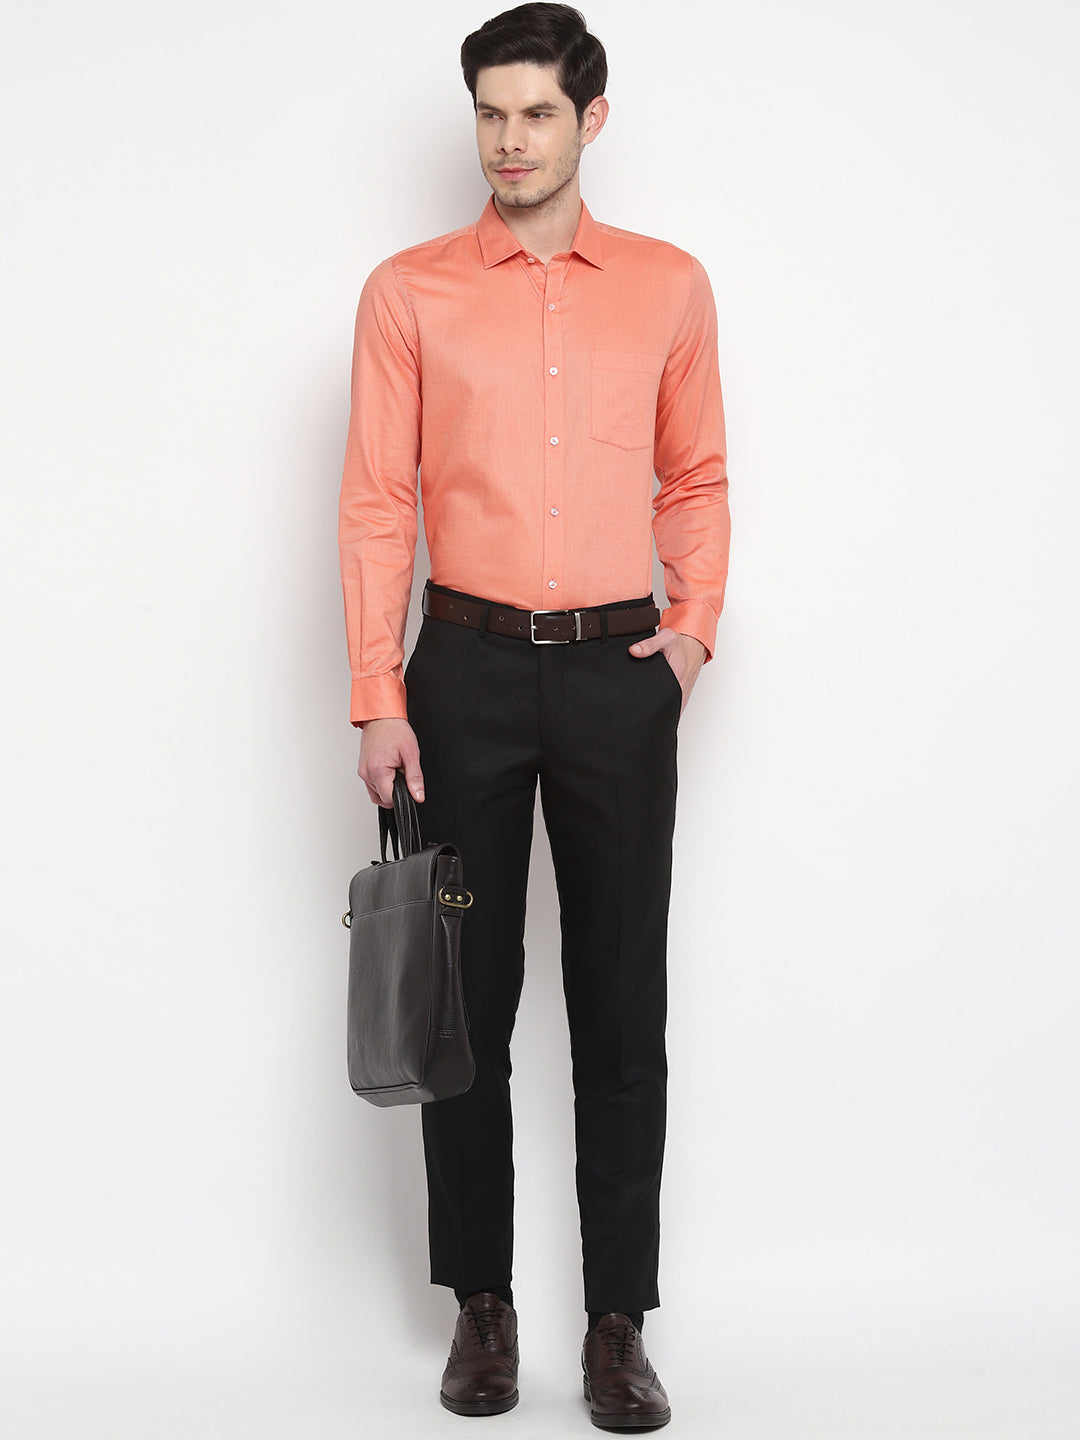 Orange Cotton Self Design Slim Fit Shirt